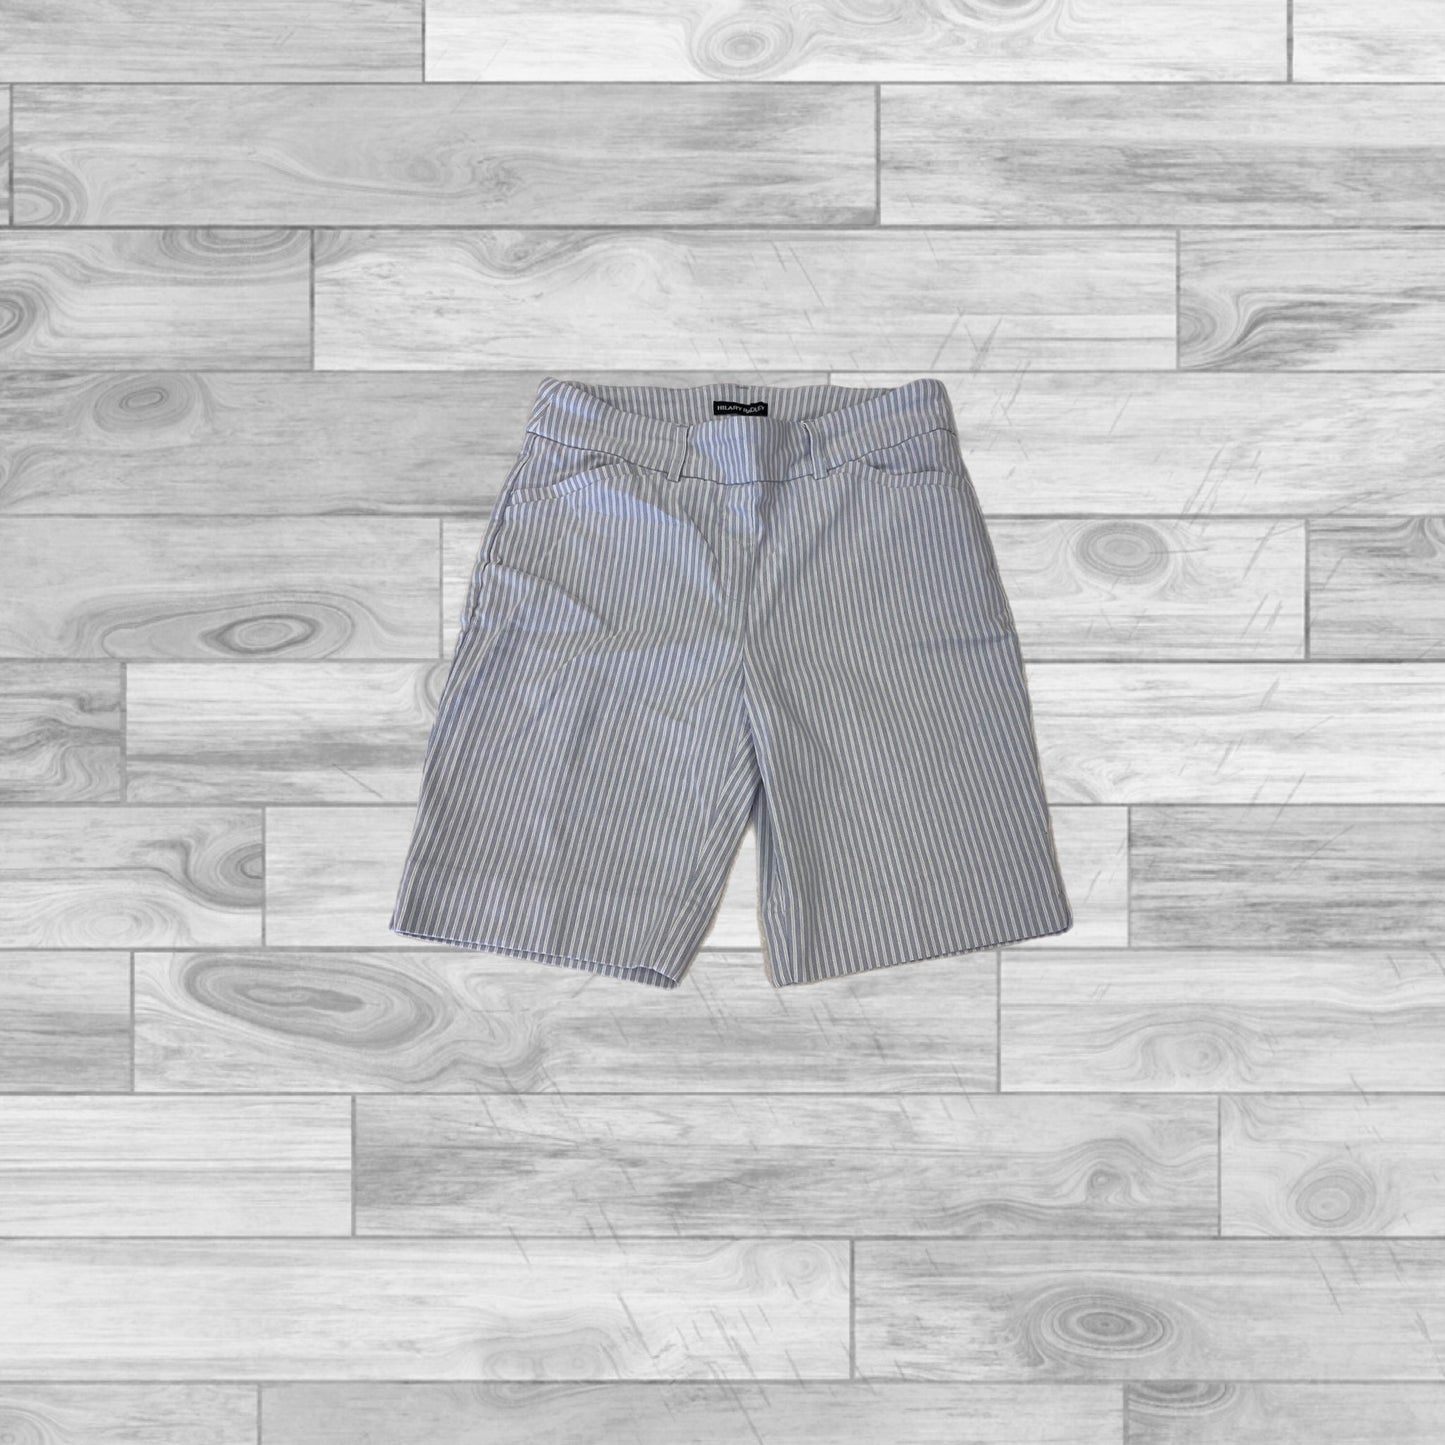 Blue & White Shorts Hilary Radley, Size M